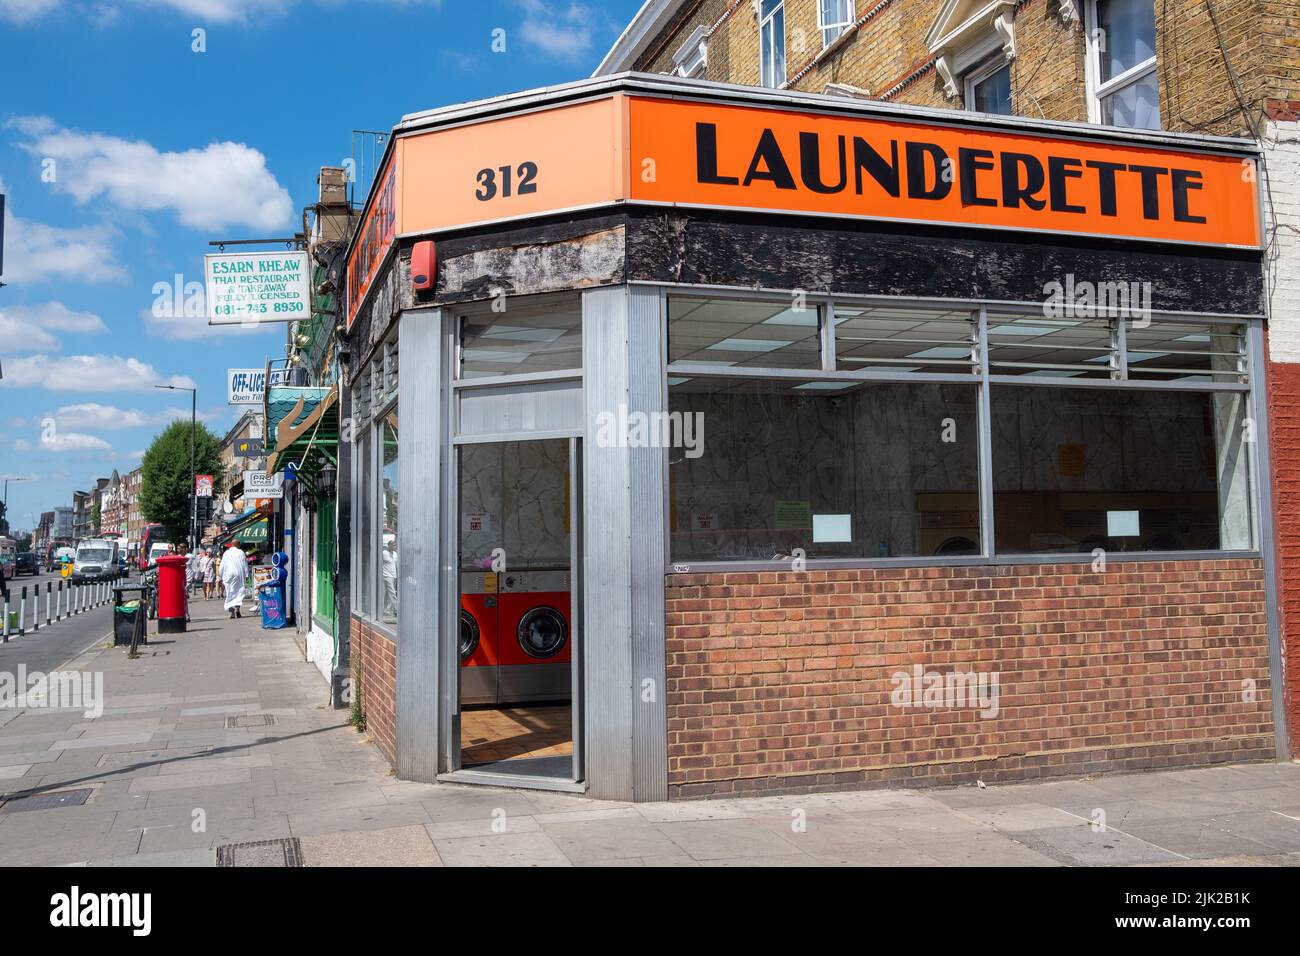 London, July 2022: Launderette on Uxbridge Road, west London high street. Stock Photo